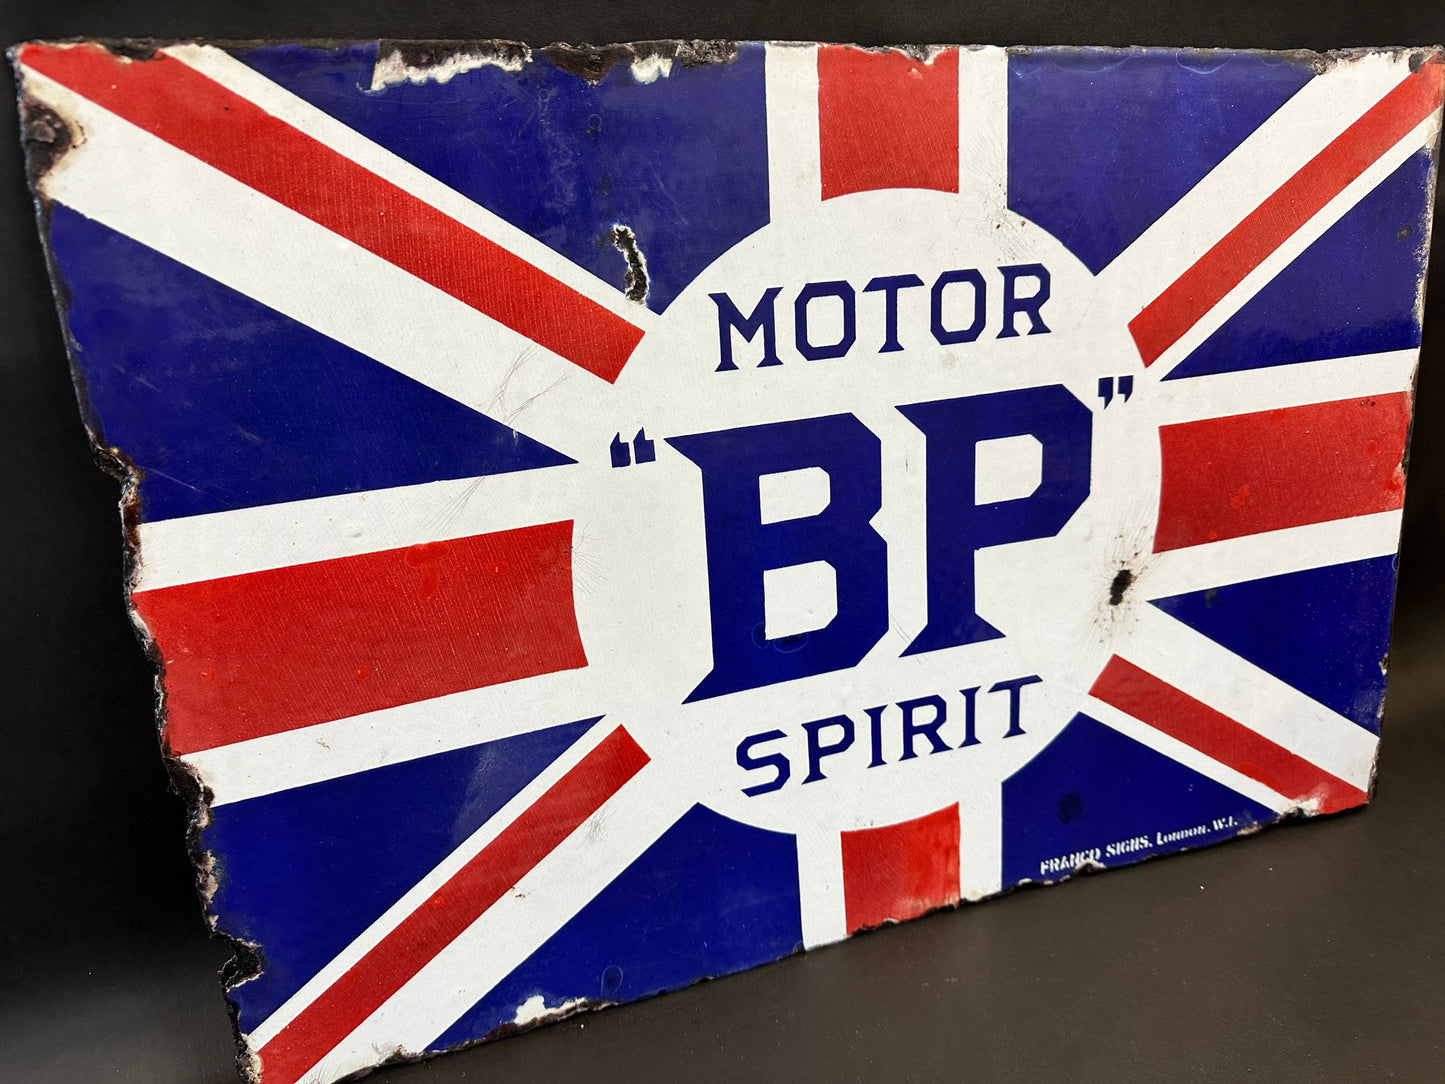 BP Motor Spirit Enamel Sign by Franco Signs